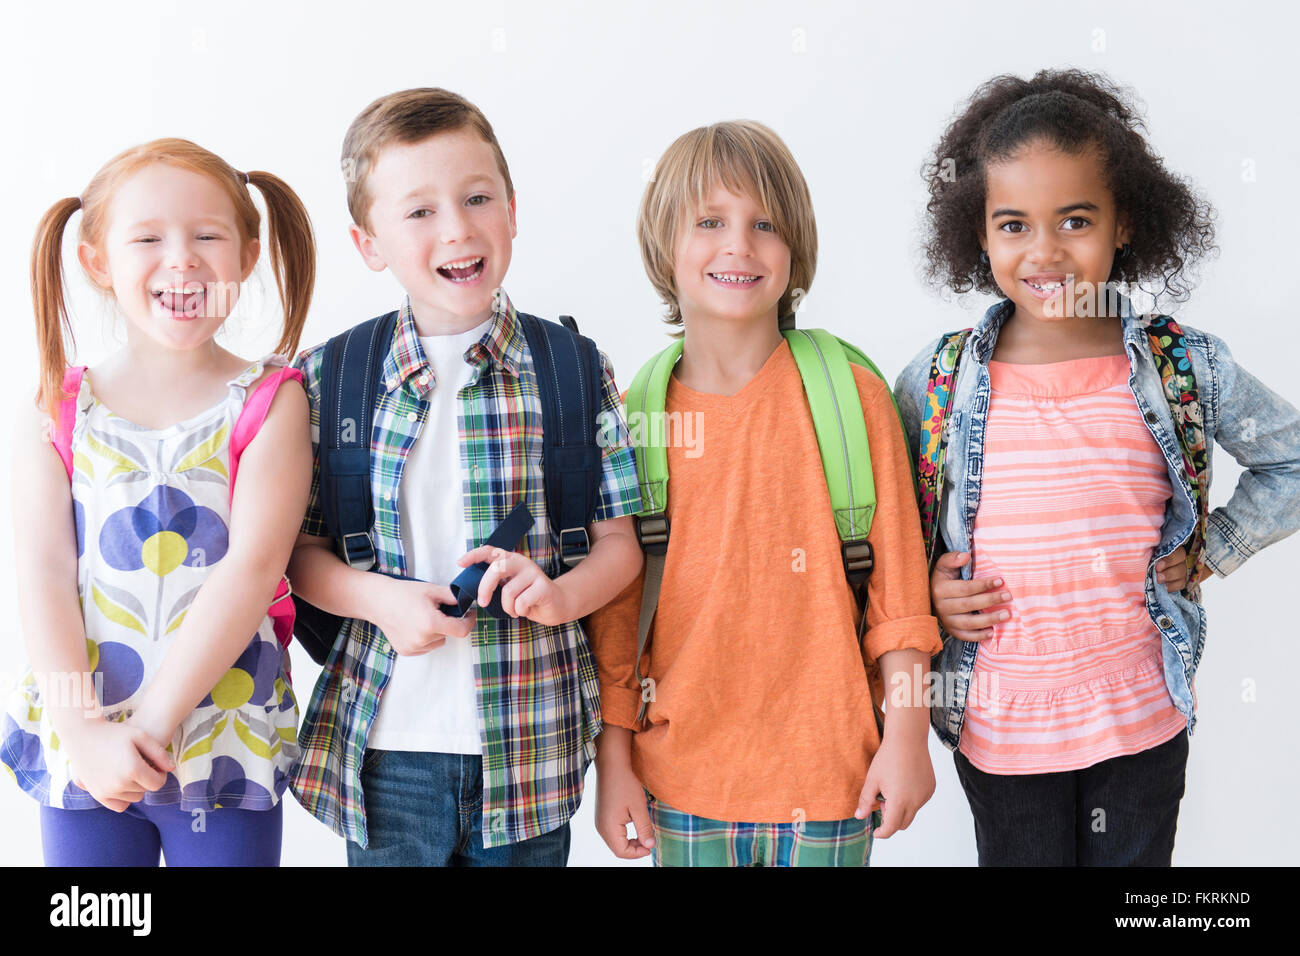 Smiling children wearing backpacks Stock Photo